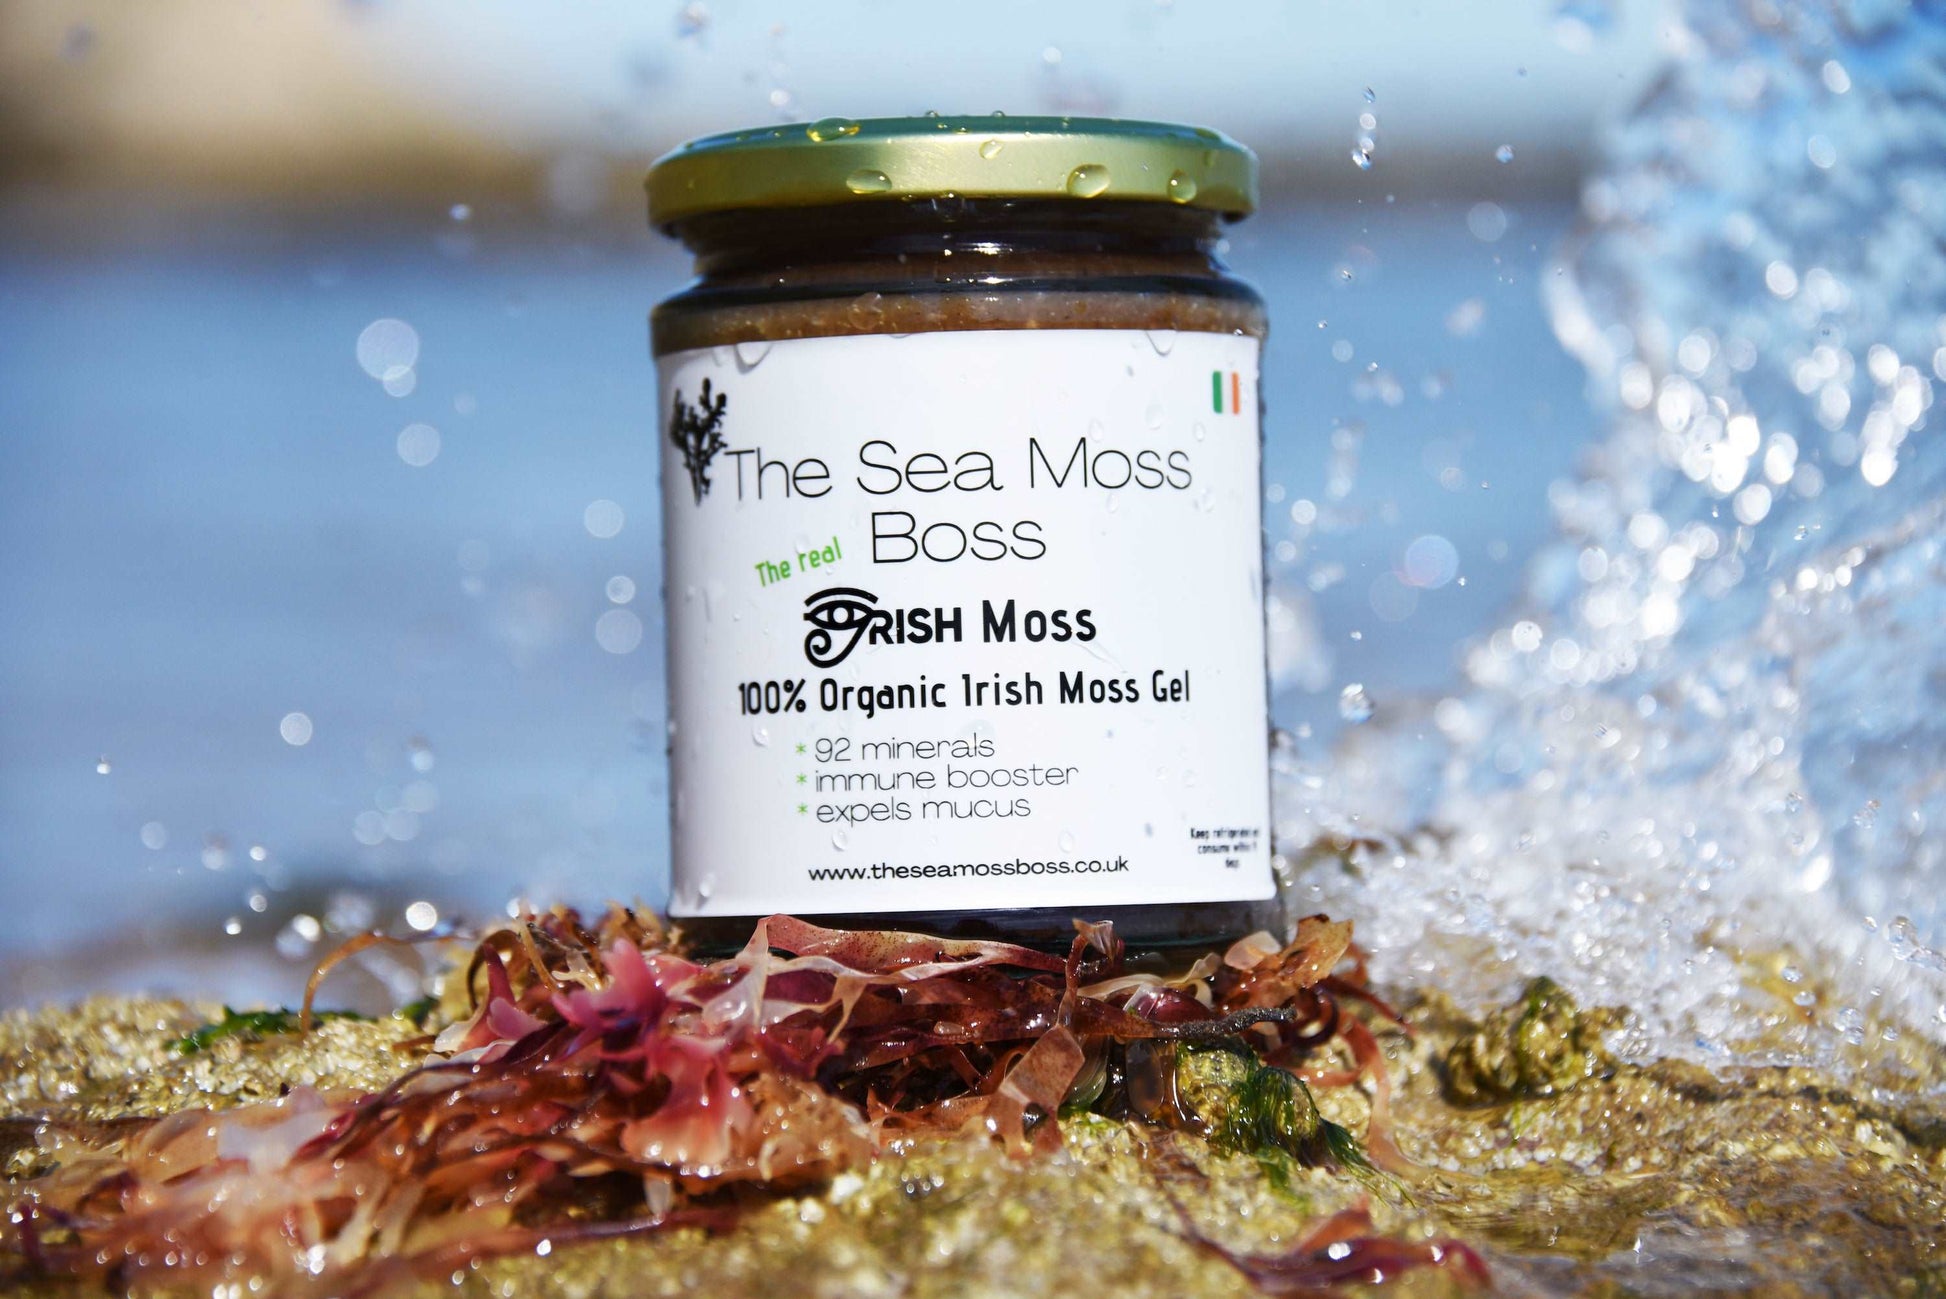 The Real Irish Moss Gel – The Sea Moss Boss